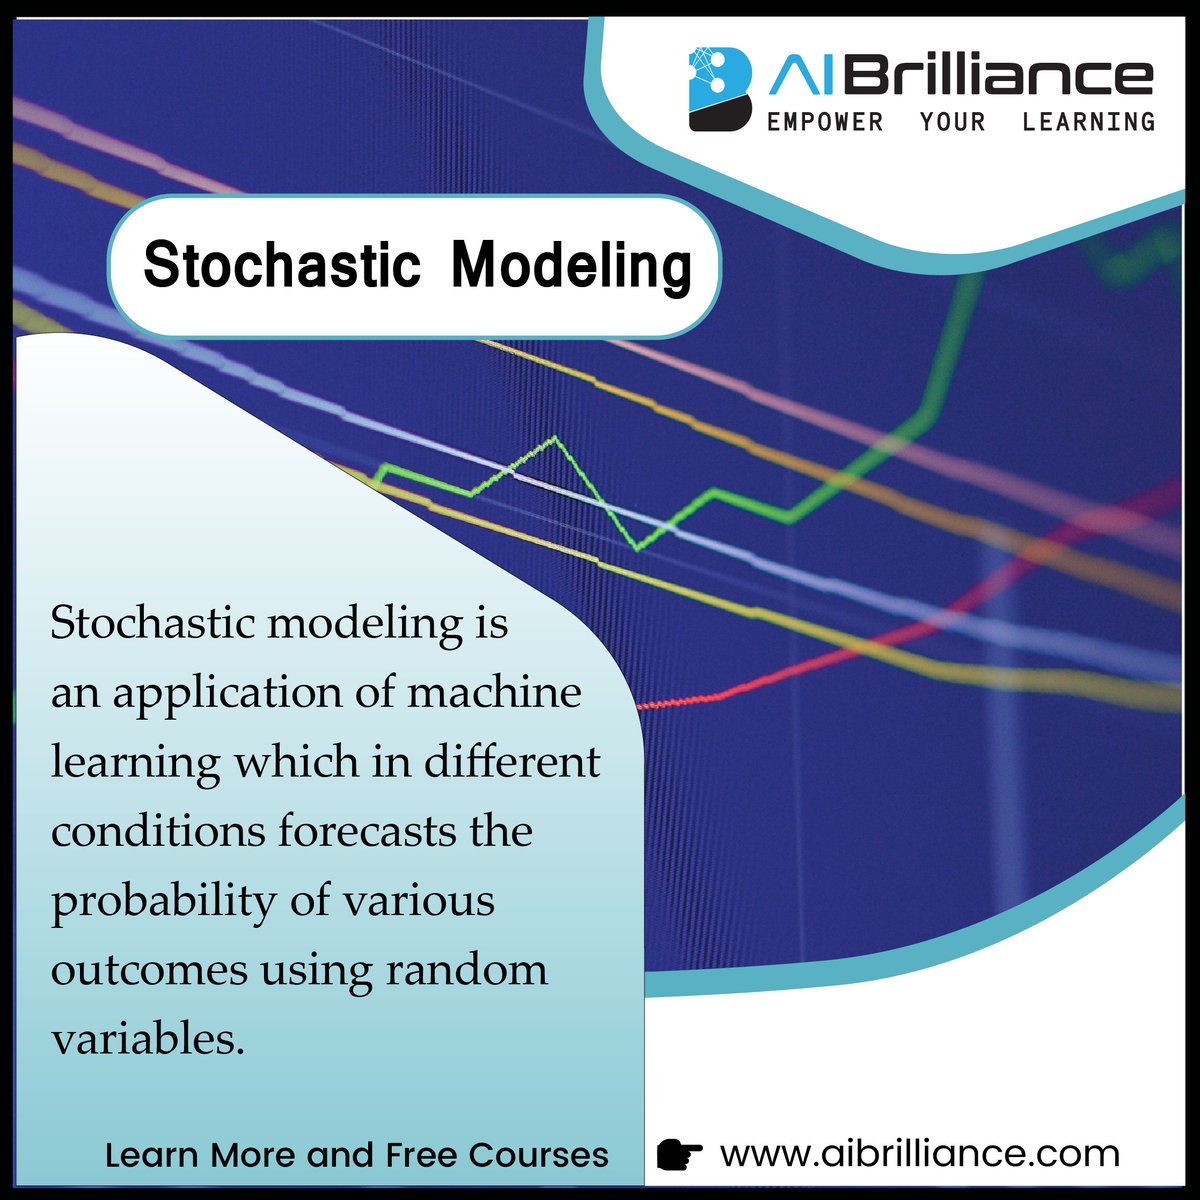 Diving into the World of Stochastic Modeling 📈 #StochasticModeling #DataScience #Probability #Model #Mathematics #Uncertainty #Analytics #DataAnalytics #StatisticalModeling #MachineLearning #ProbabilityTheory #Analytics #Insights #DataAnalysis #QuantitativeAnalysis #Modeling